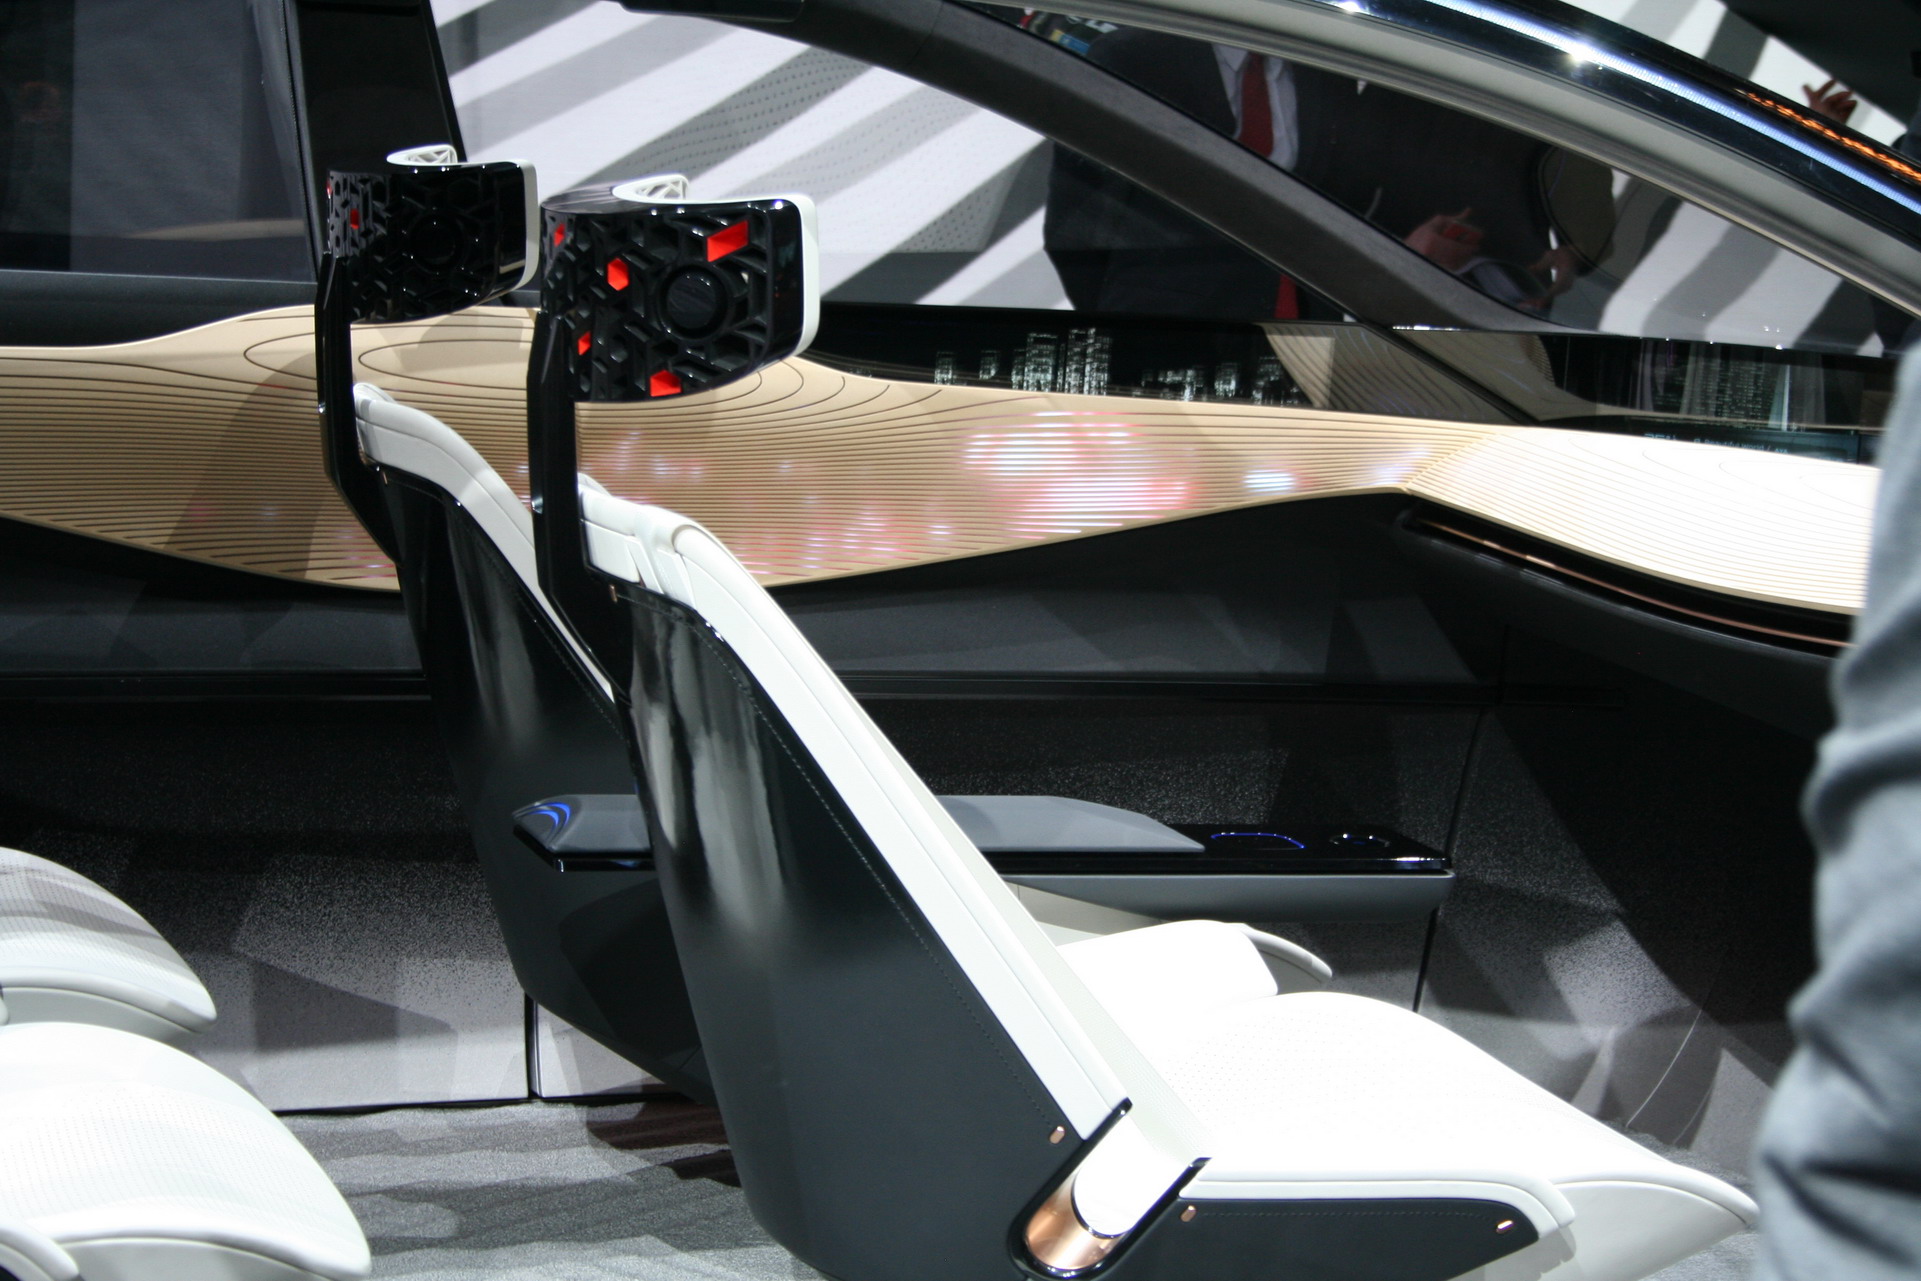 Nissan Debuts Spiffy Imx Kuro Concept In Geneva Carscoops